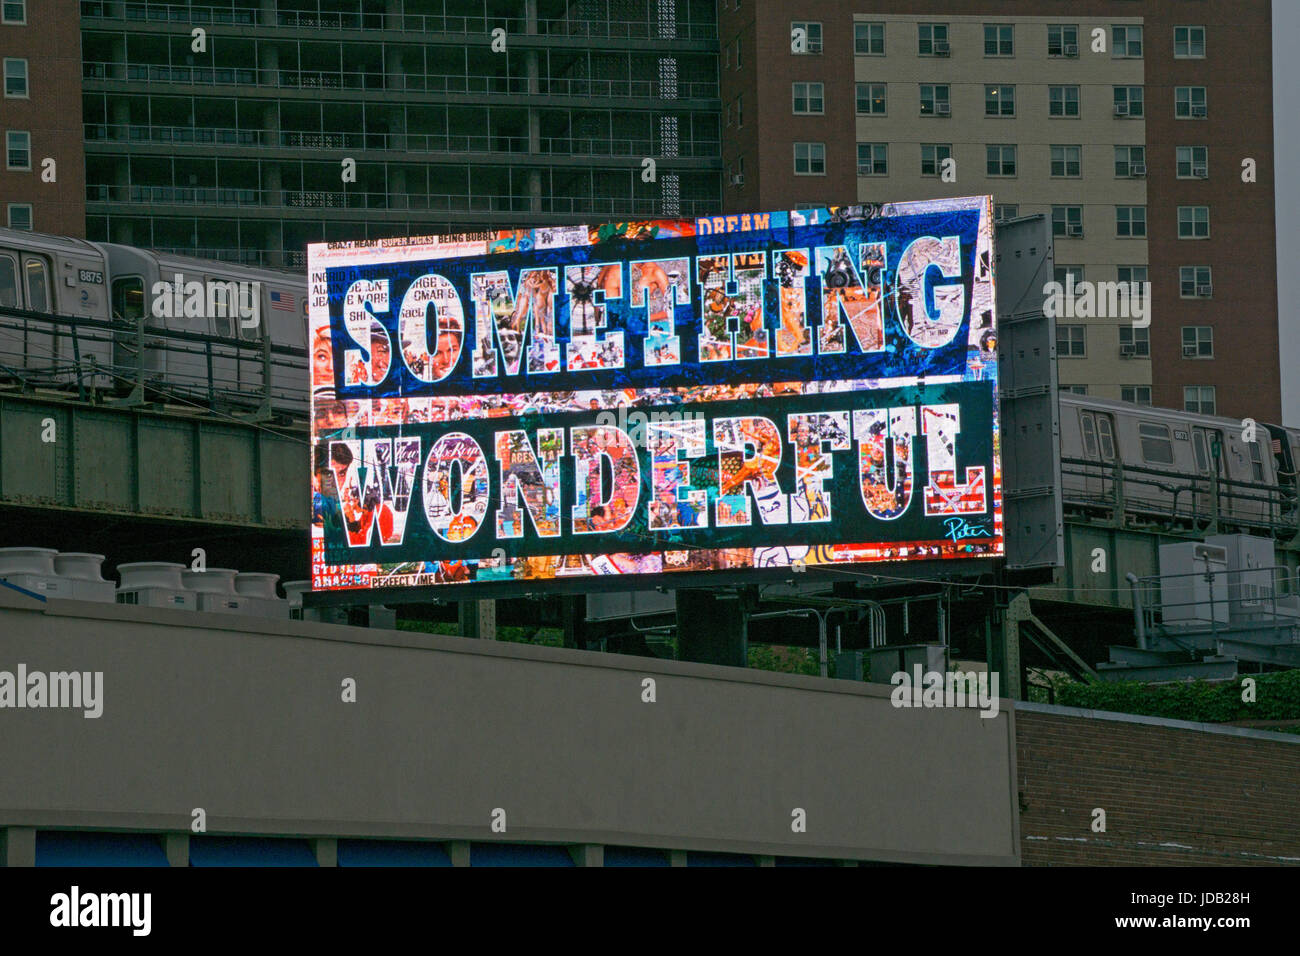 SOMETHING WONDERFUL. Mysterious digital billboard sign on Surf avenue in Coney Island, Brooklyn, New York Stock Photo